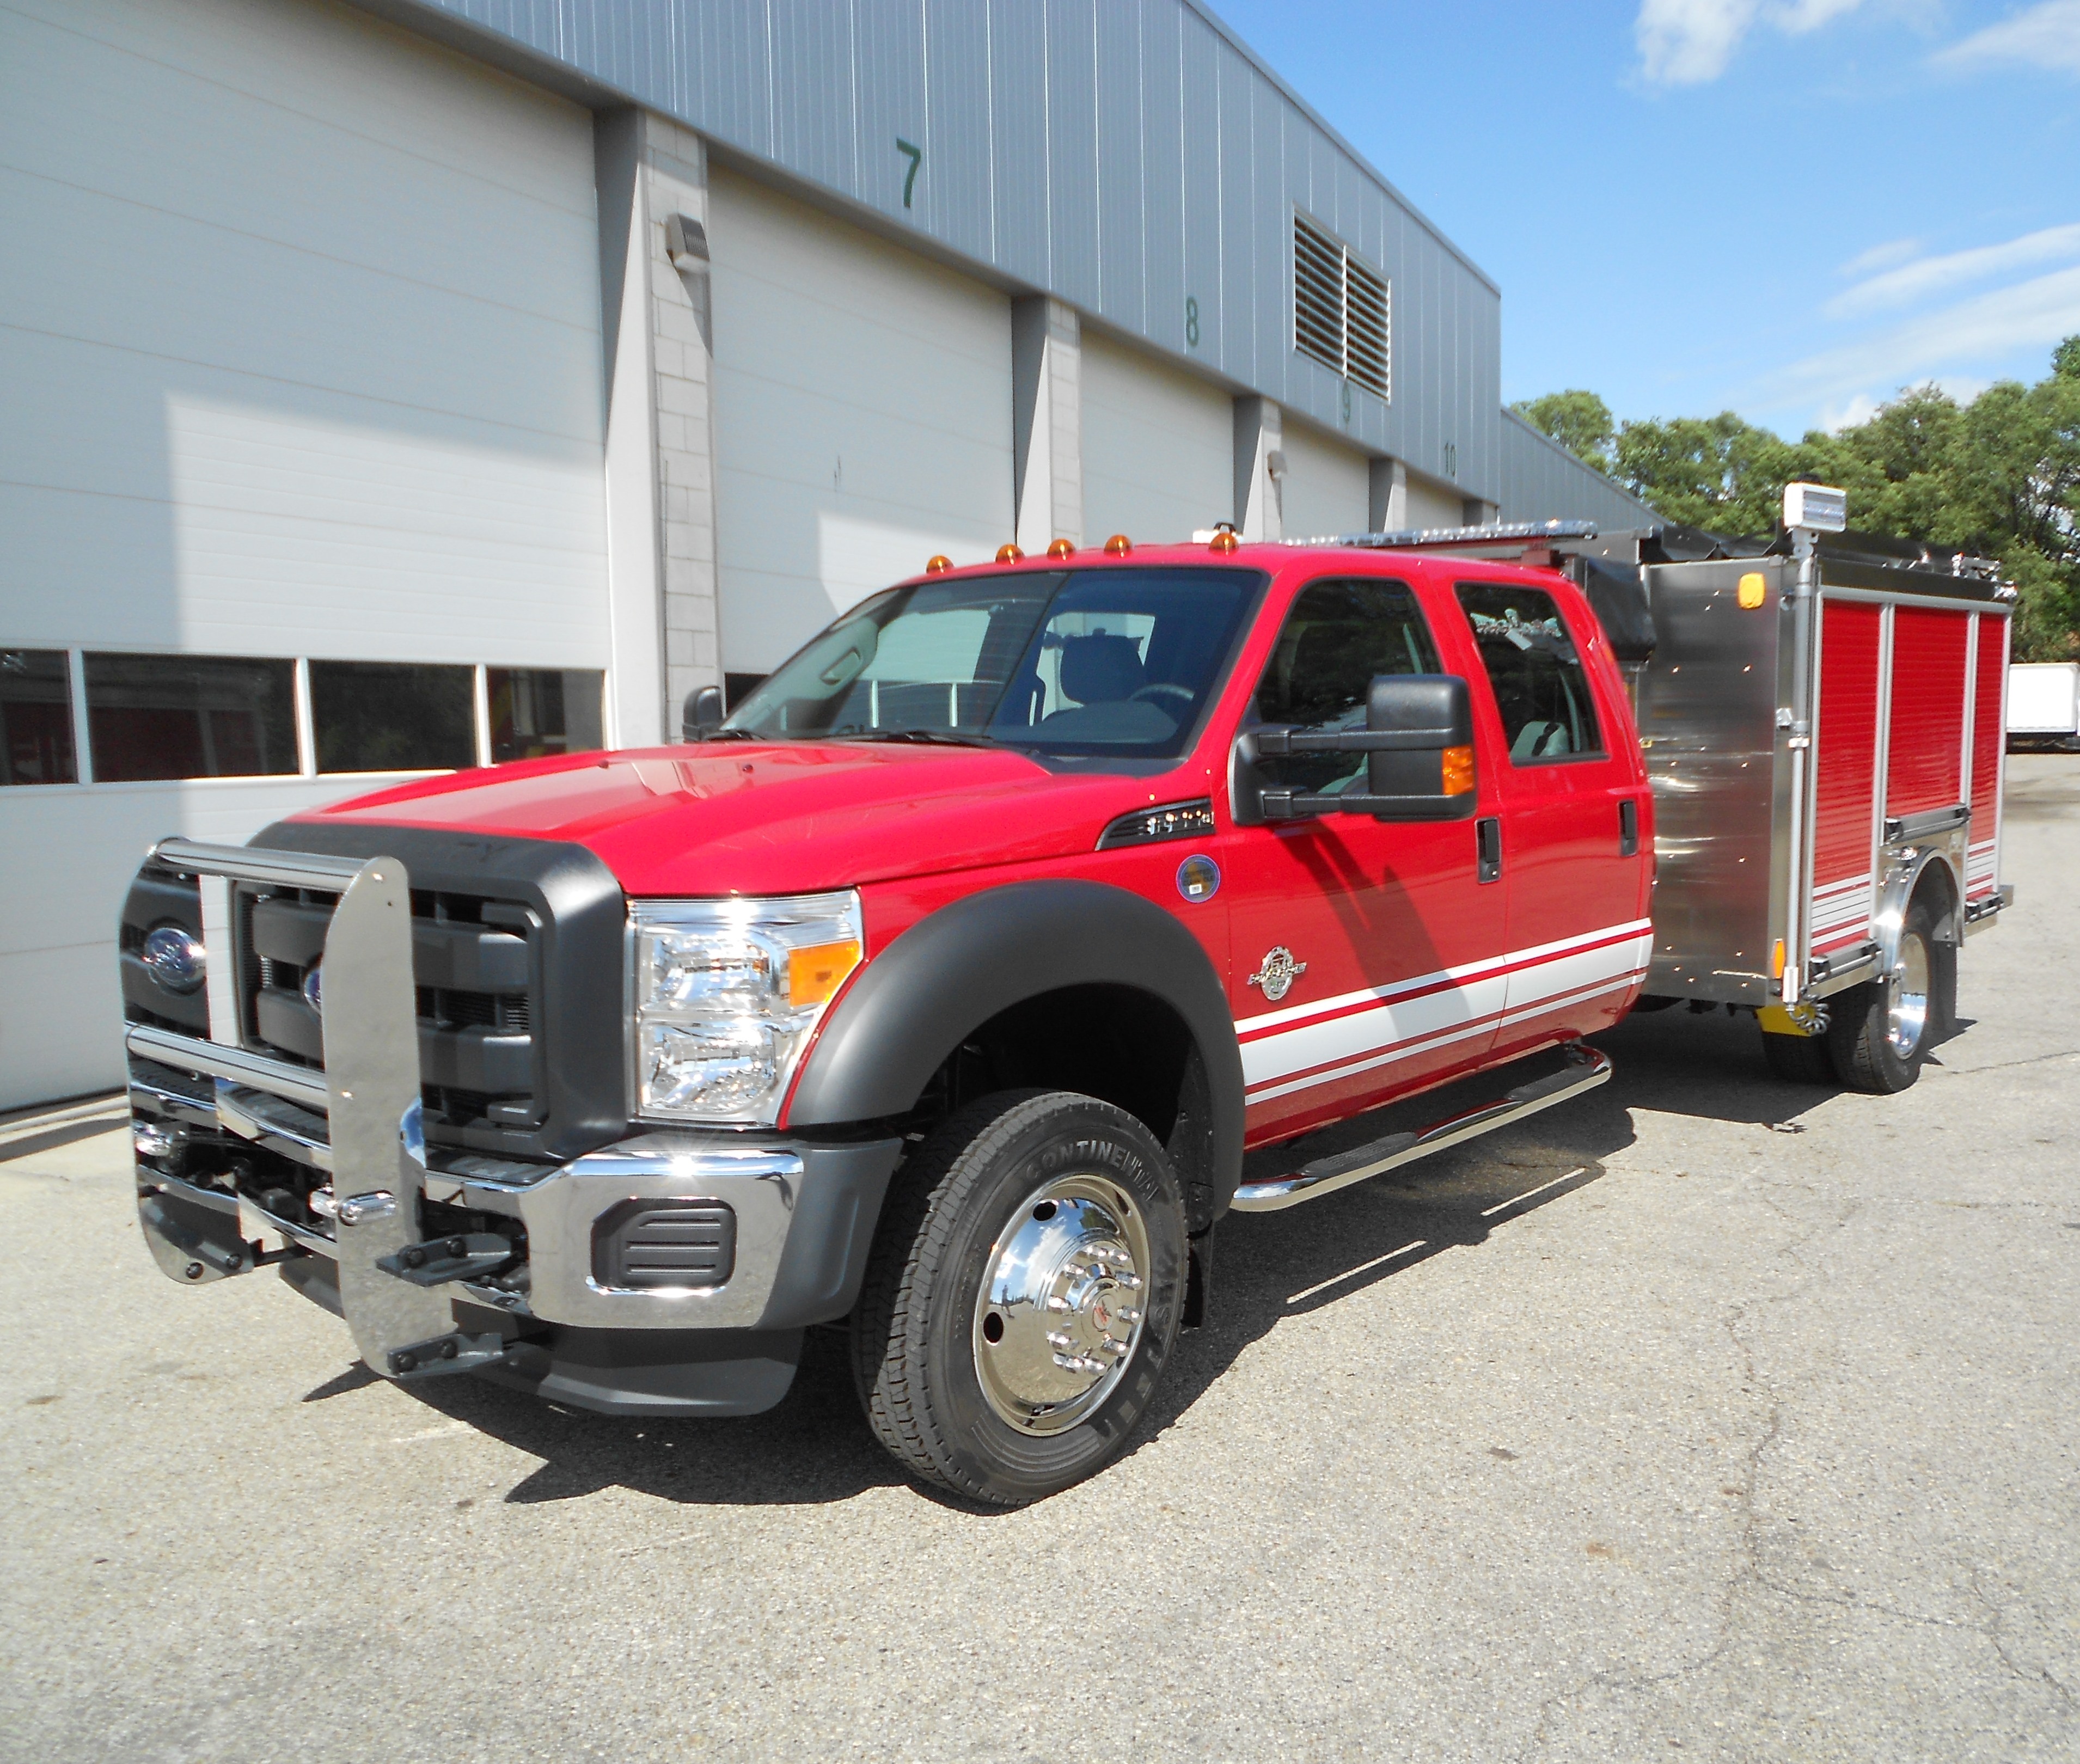 Jordan Volunteer Fire Department, NY – #22891